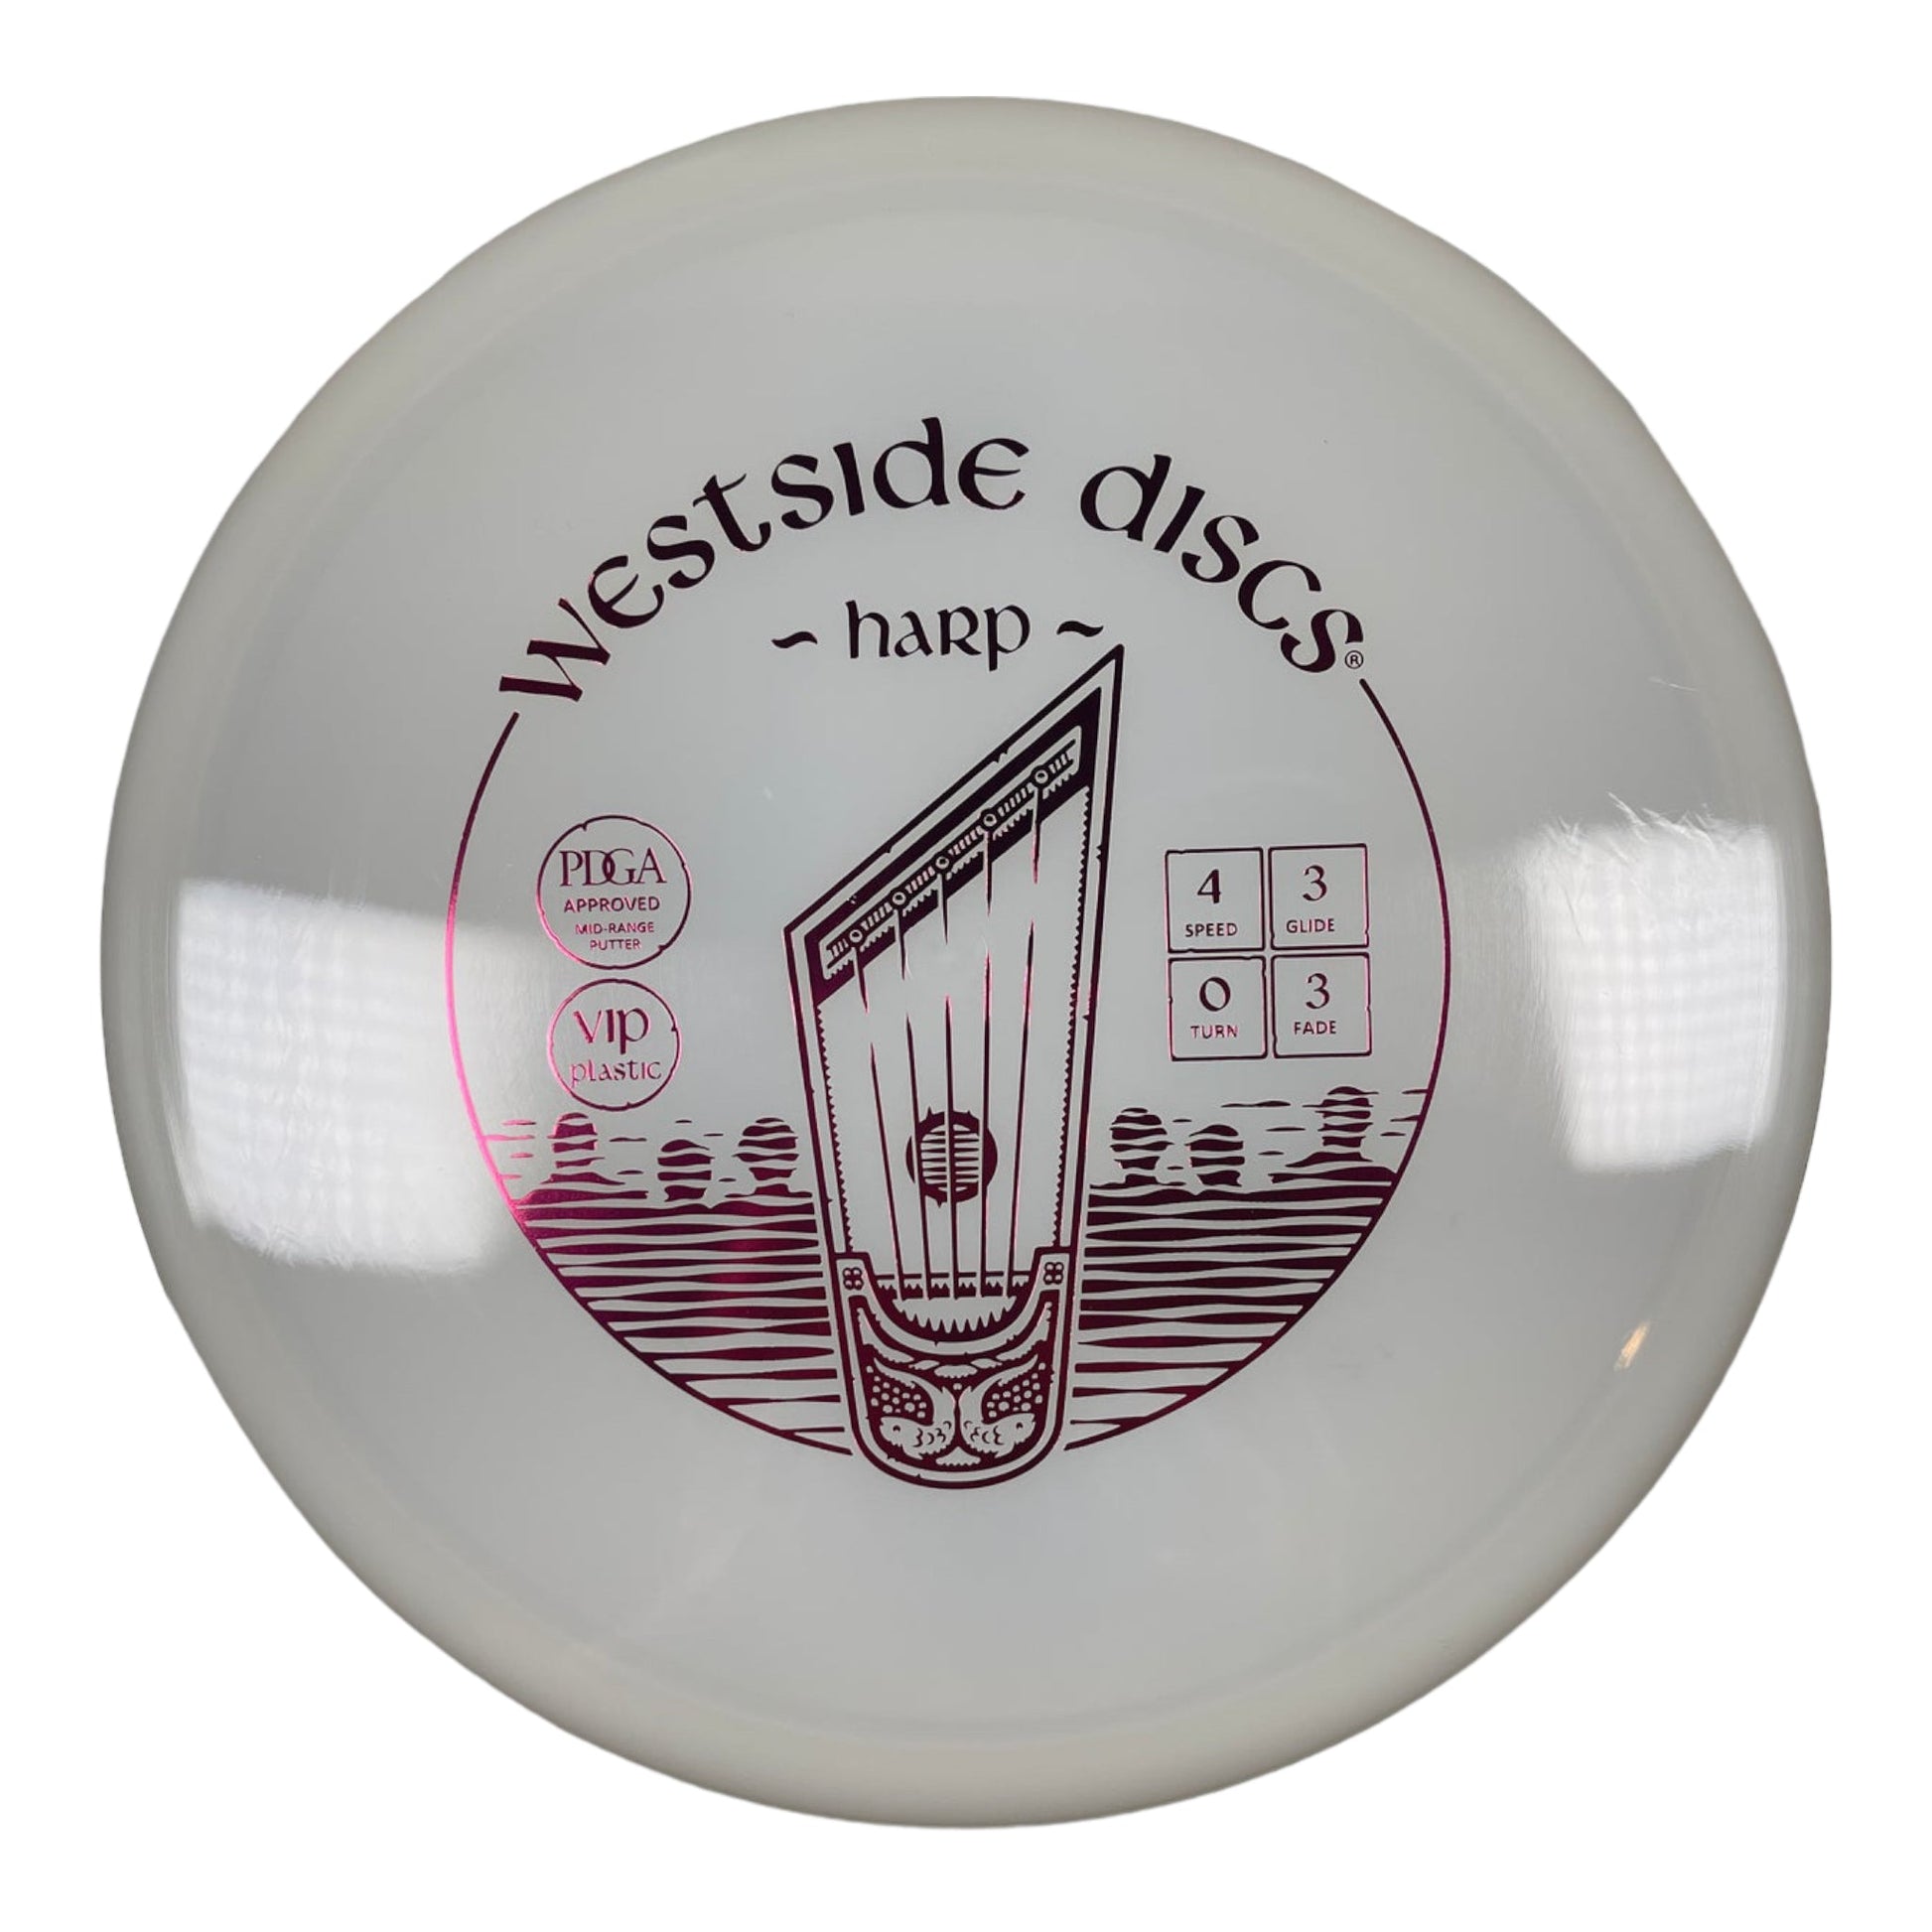 Westside Discs Harp | VIP | White/Pink 176g Disc Golf